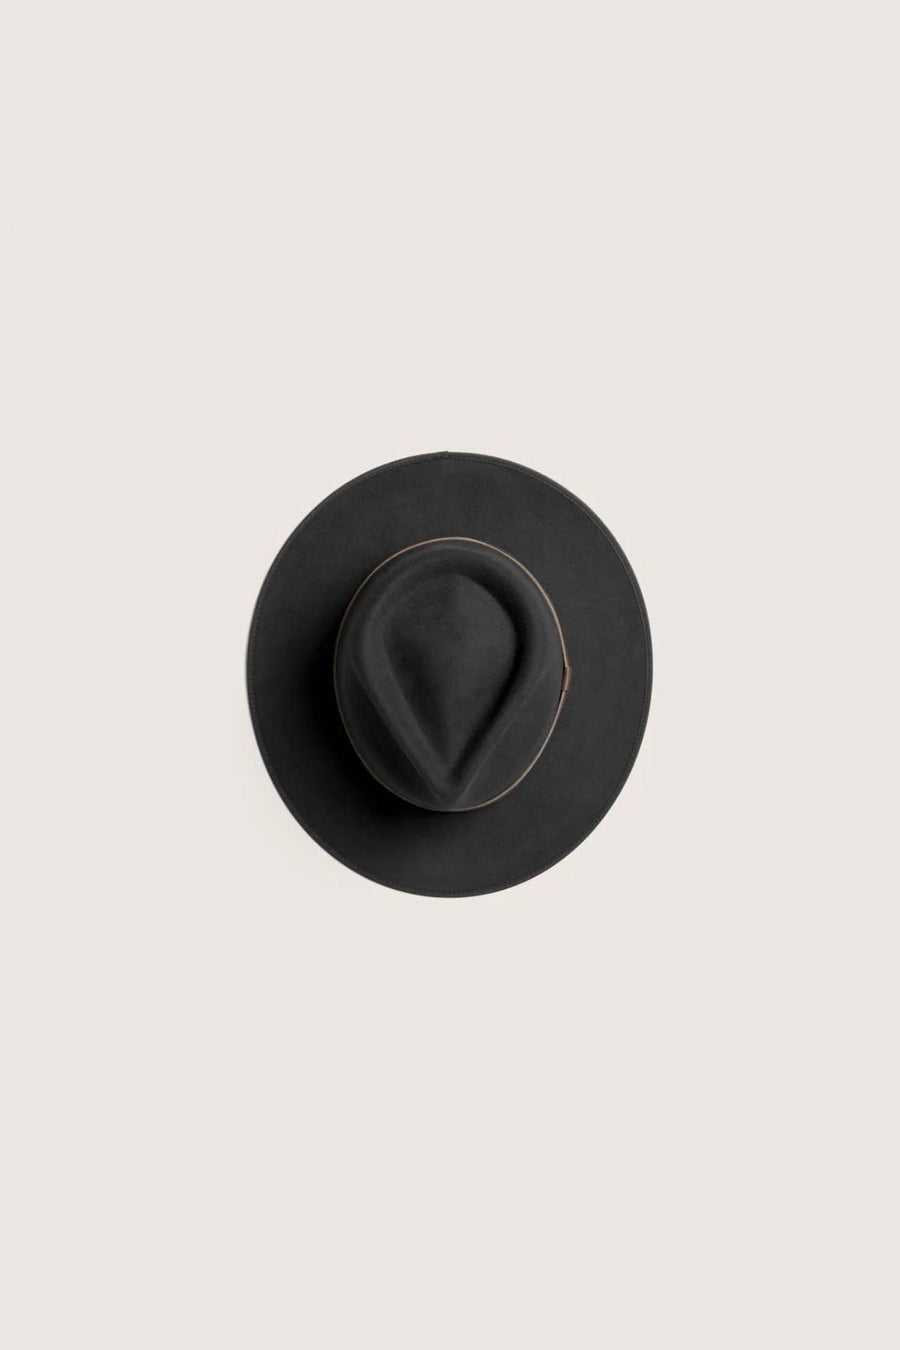 Calloway Wool Hat Black